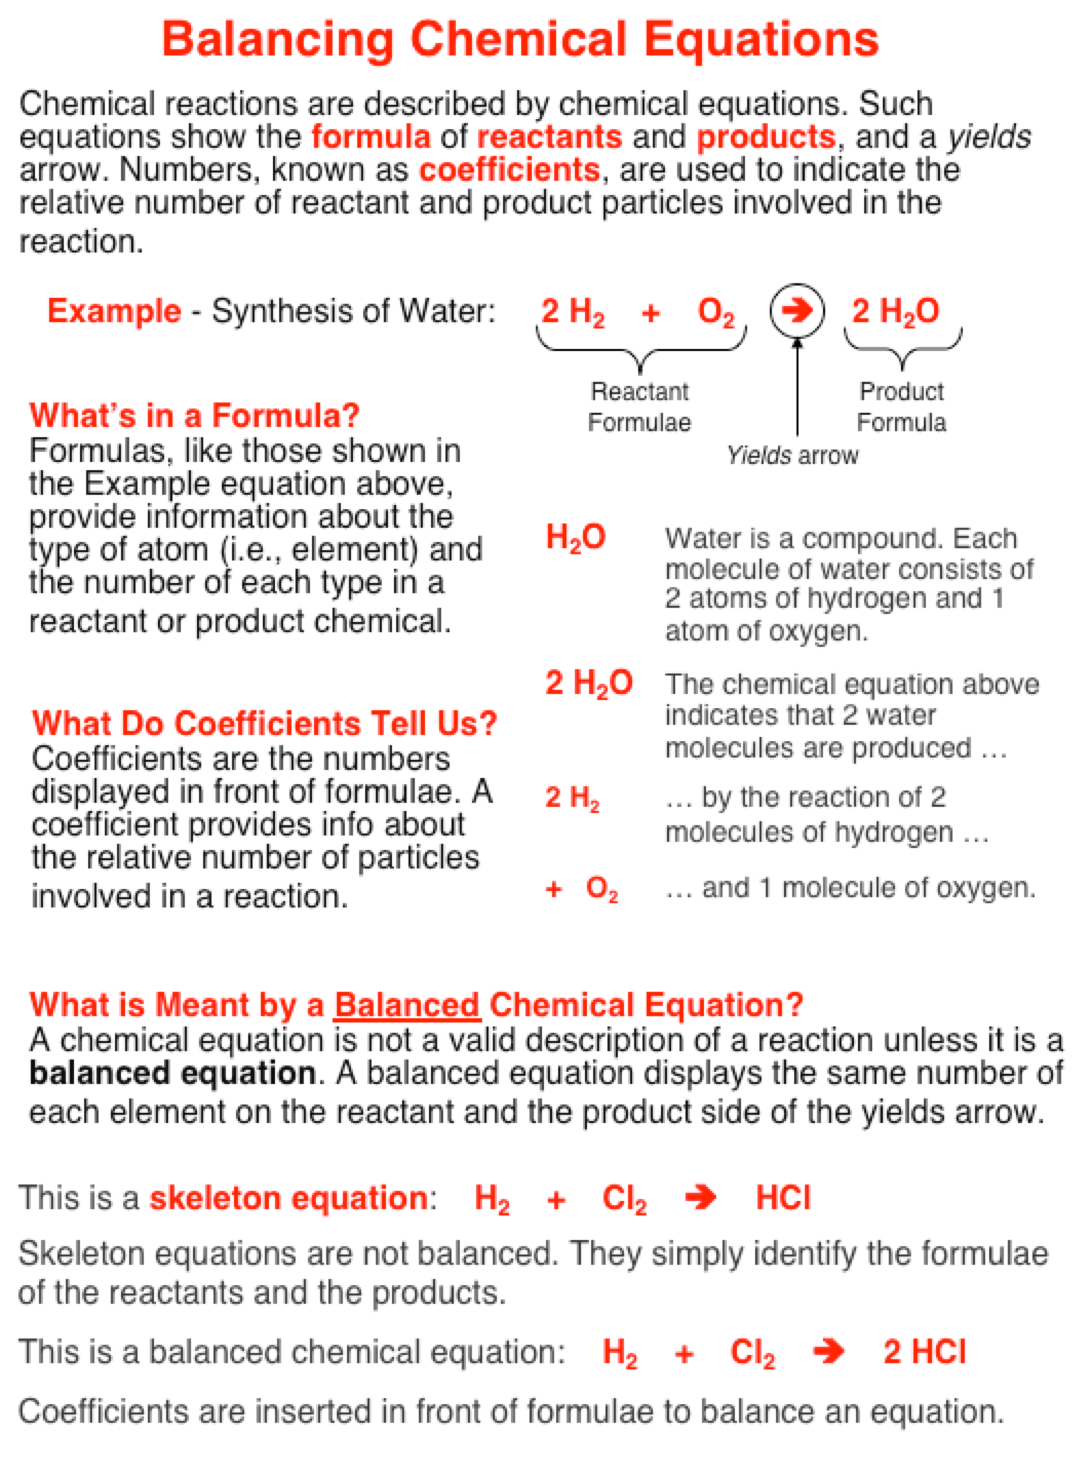 the following fake chemical equation balancer